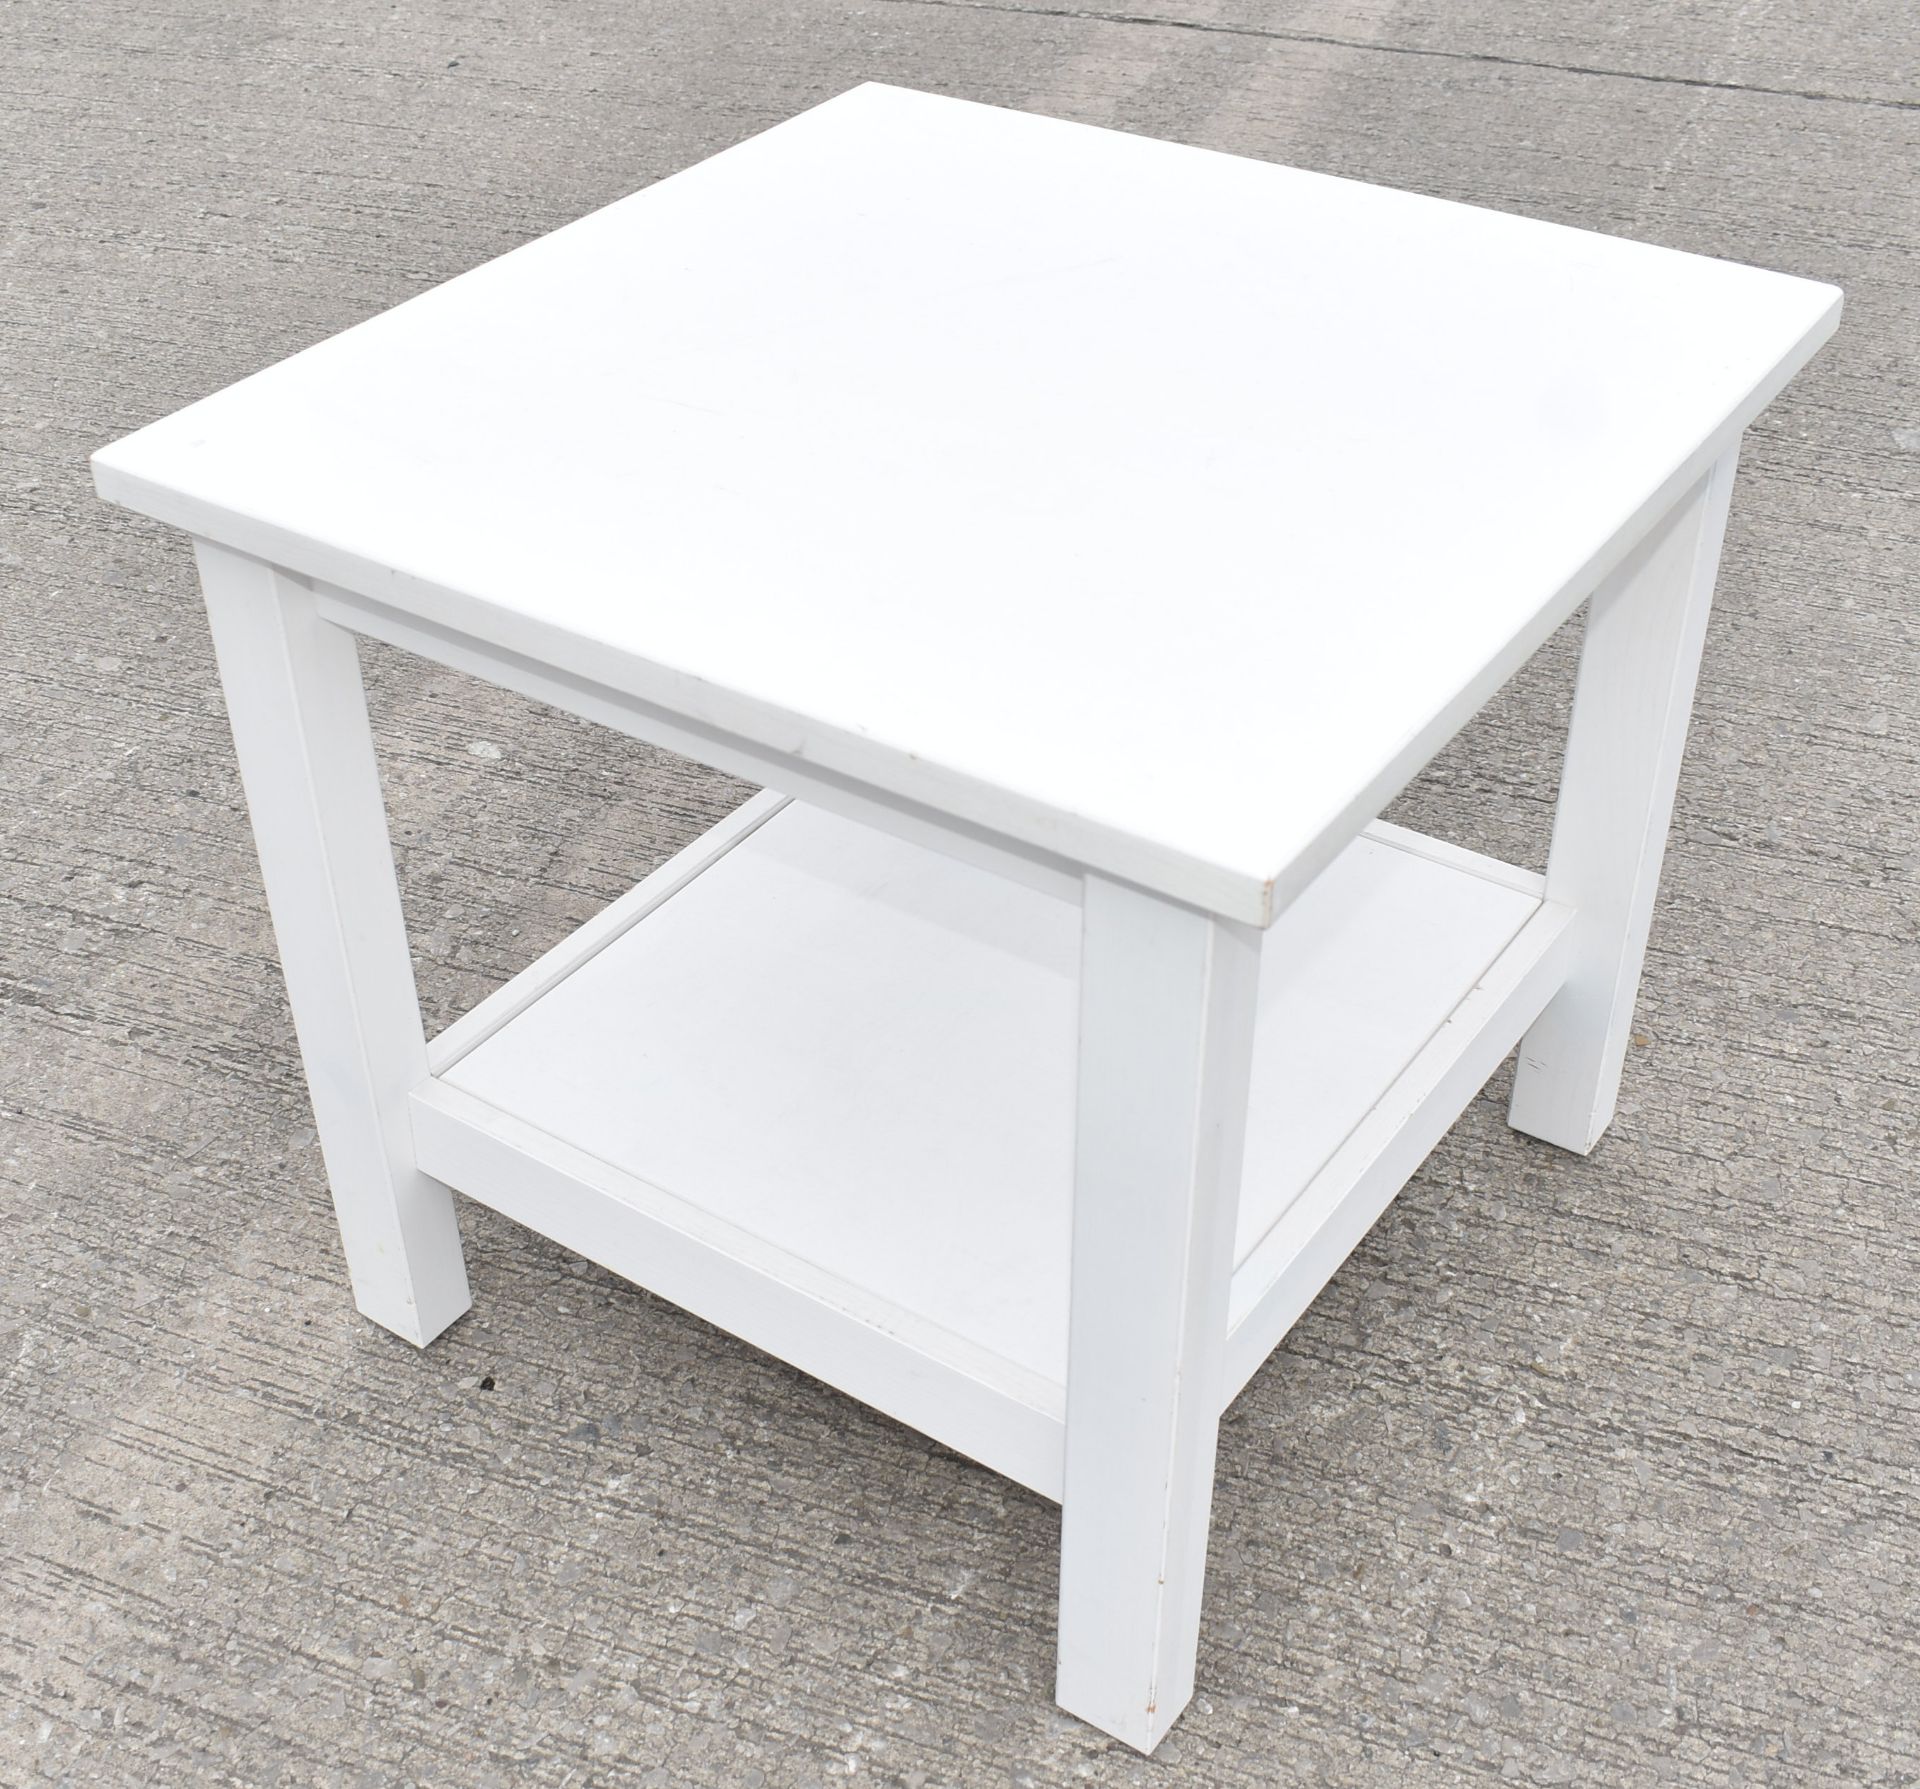 1 x White Square Wooden Table - 56x56x51cm - Ref: K289 - CL905 - Location: Altrincham WA14*Stock - Image 5 of 9